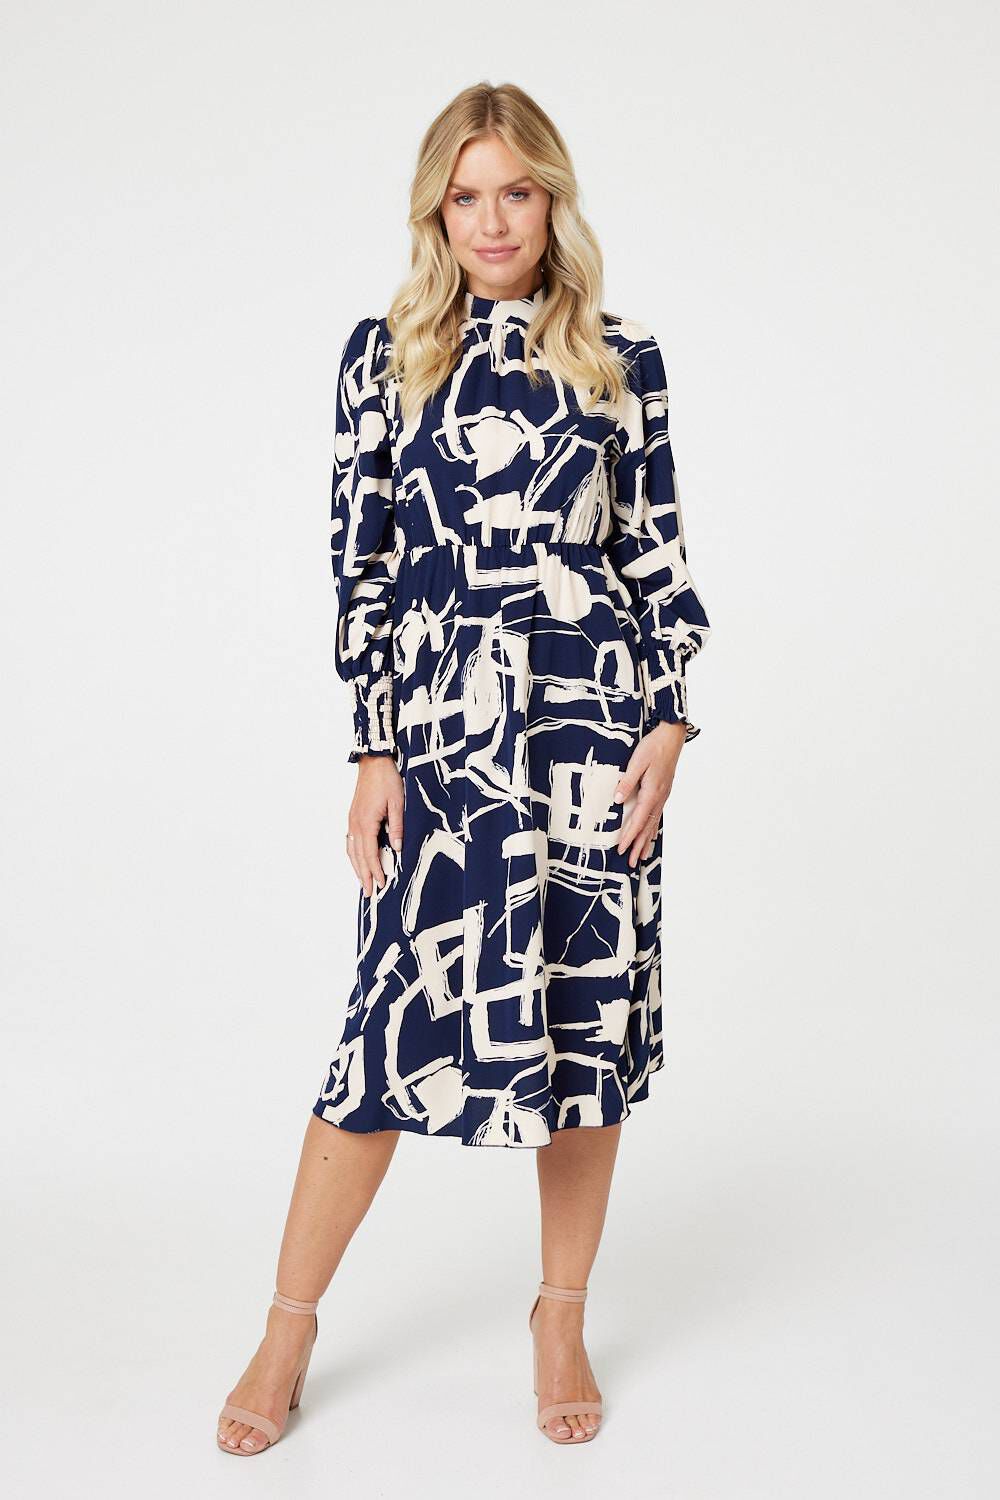 Izabel London Navy - Printed High Necked Midi Dress, Size: S